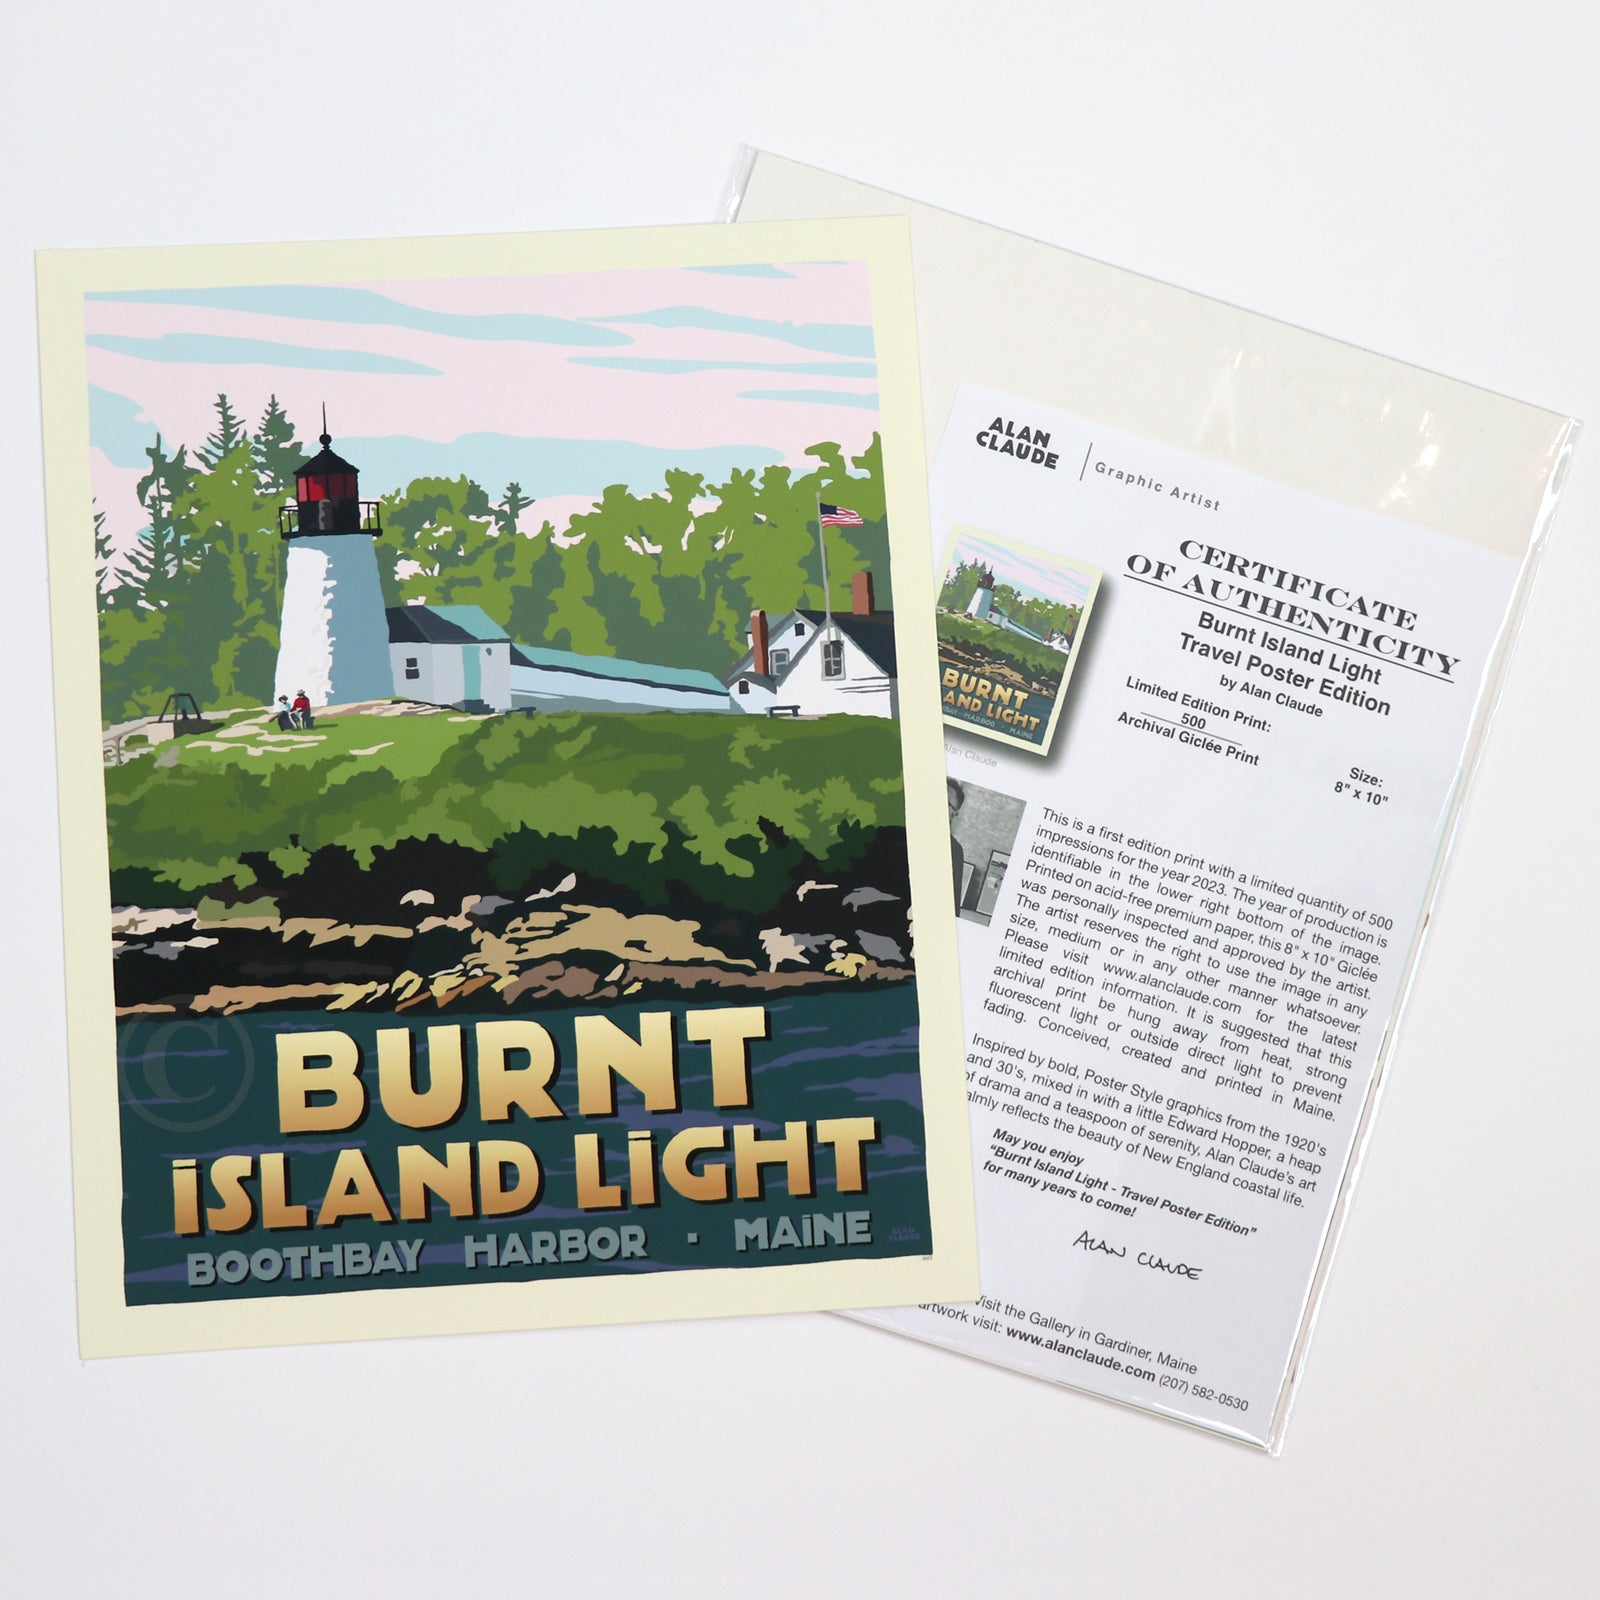 Burnt Island Light Art Print 8" x 10" Travel Poster By Alan Claude - Maine